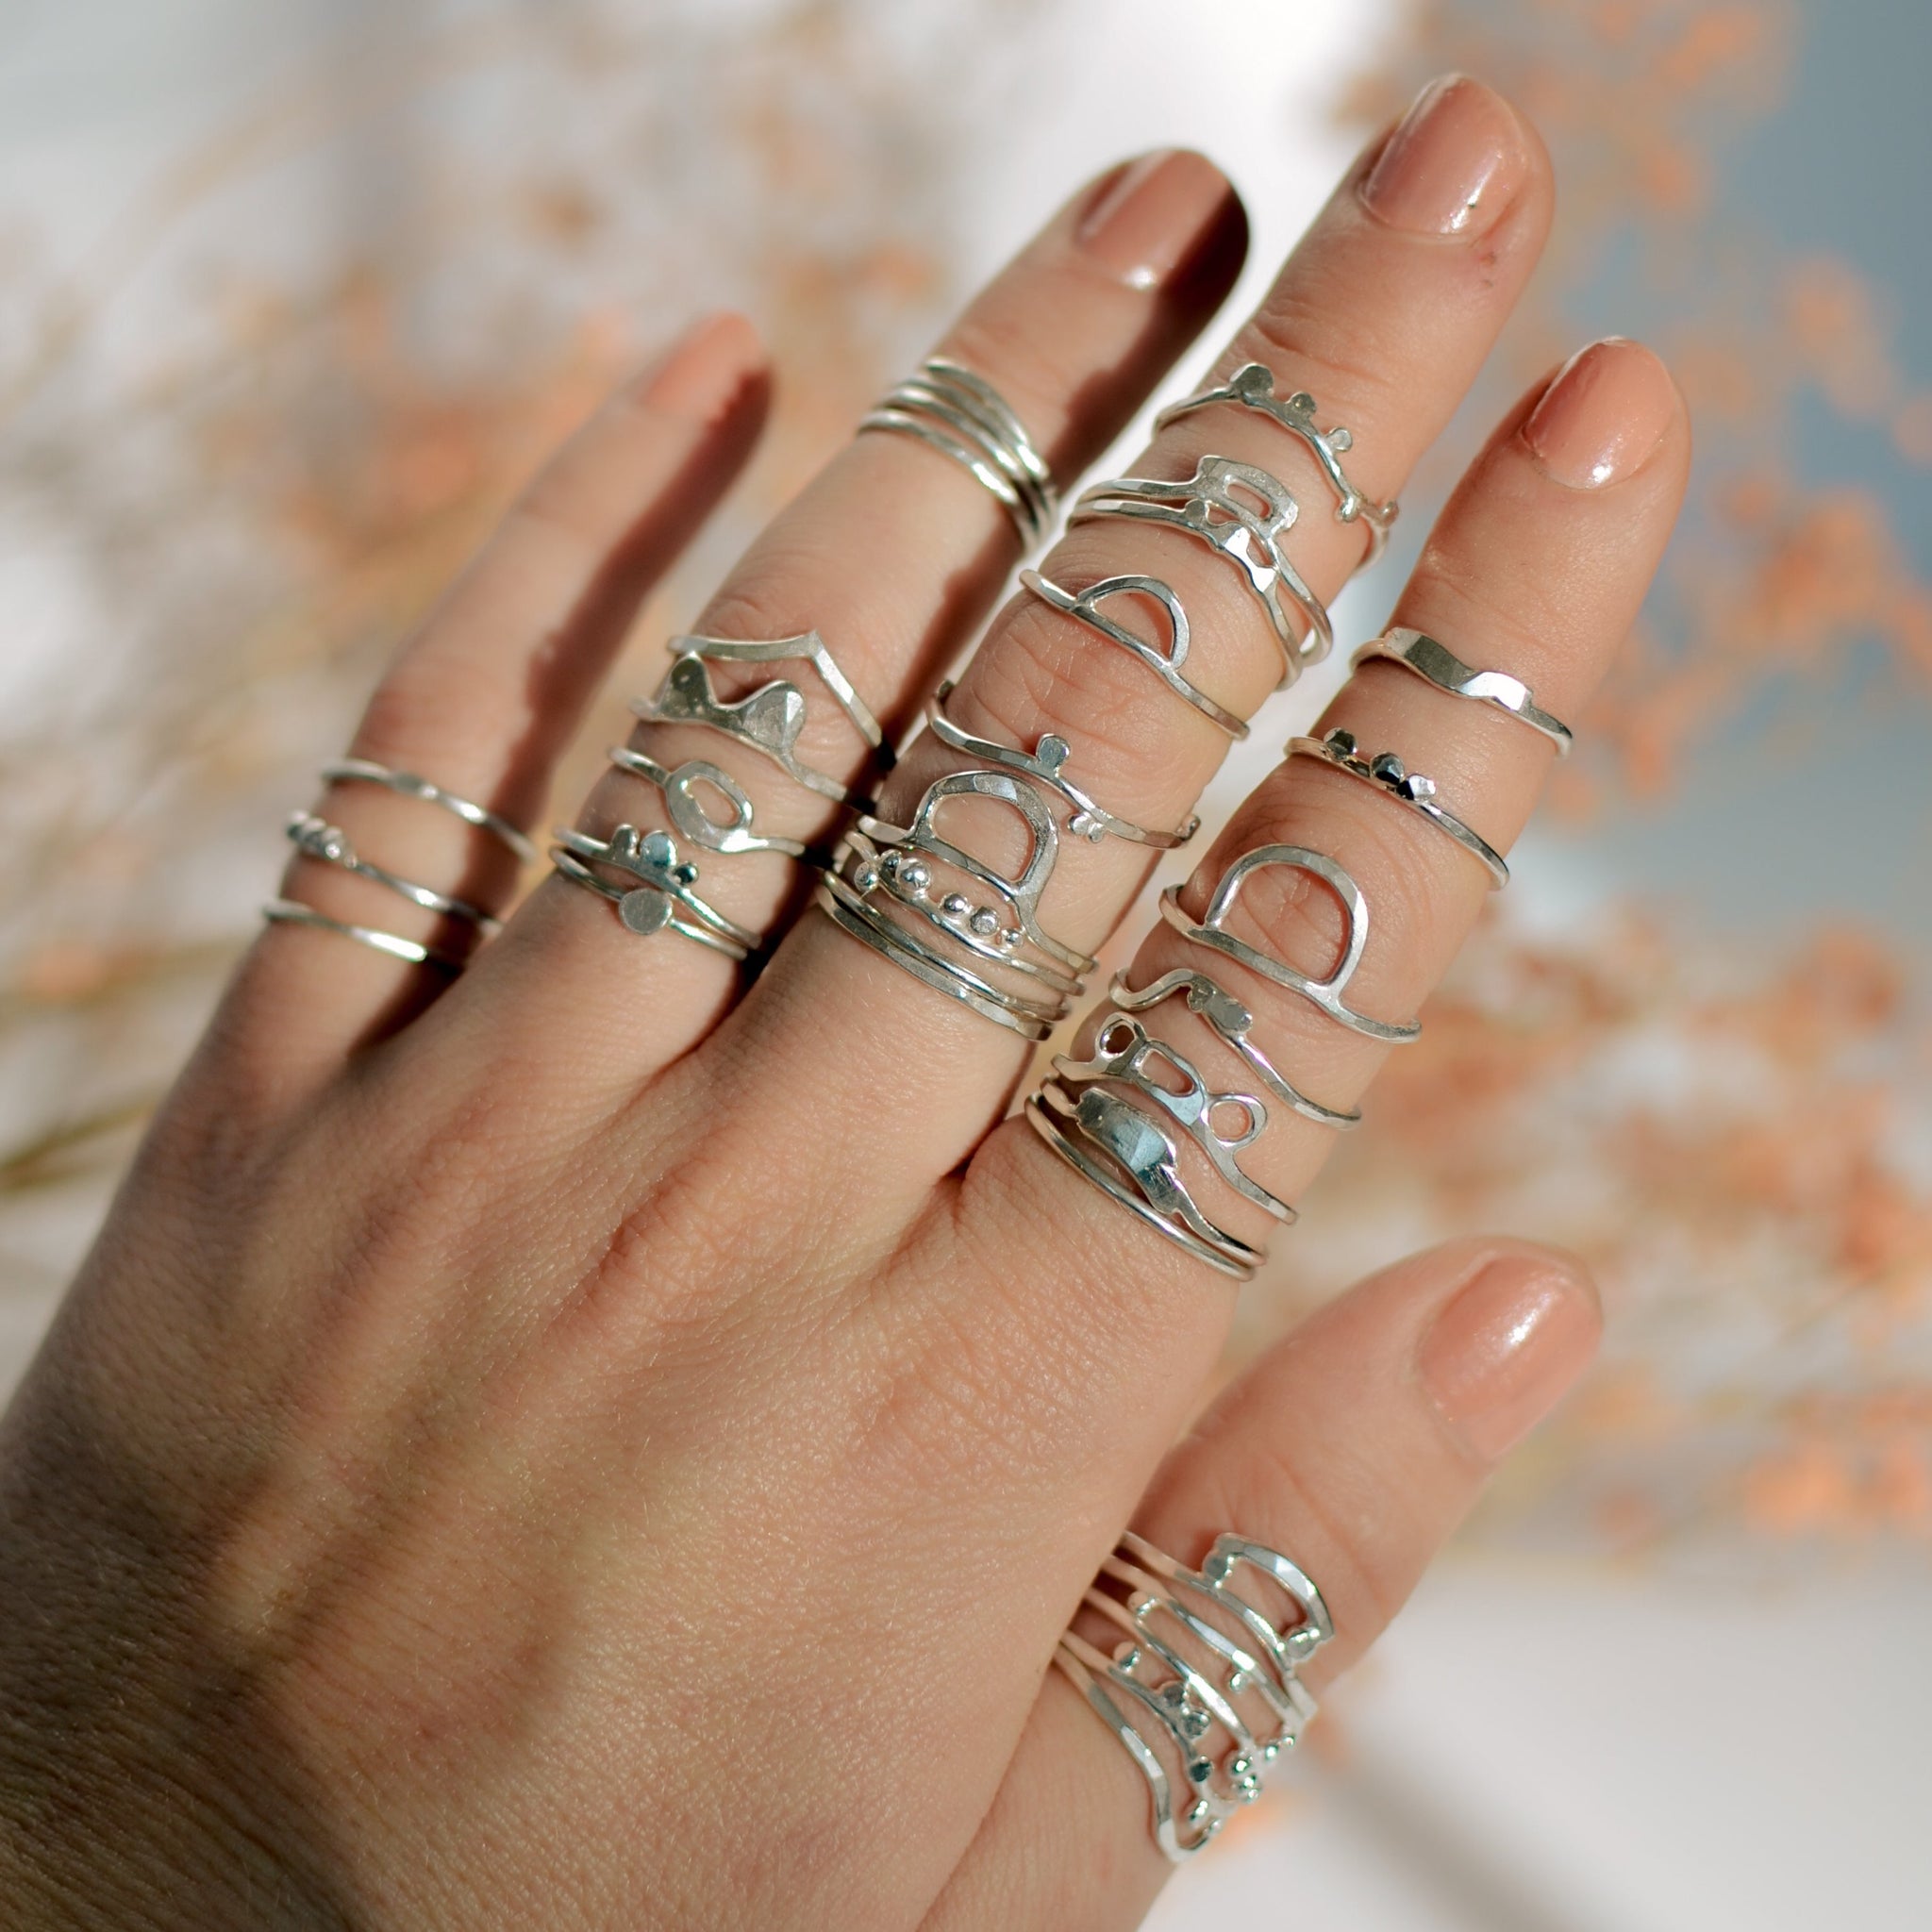 Buy 925 Silver Hug Me Finger Ring for Women & Girl | Adjustable Size Finger  Ring at Amazon.in